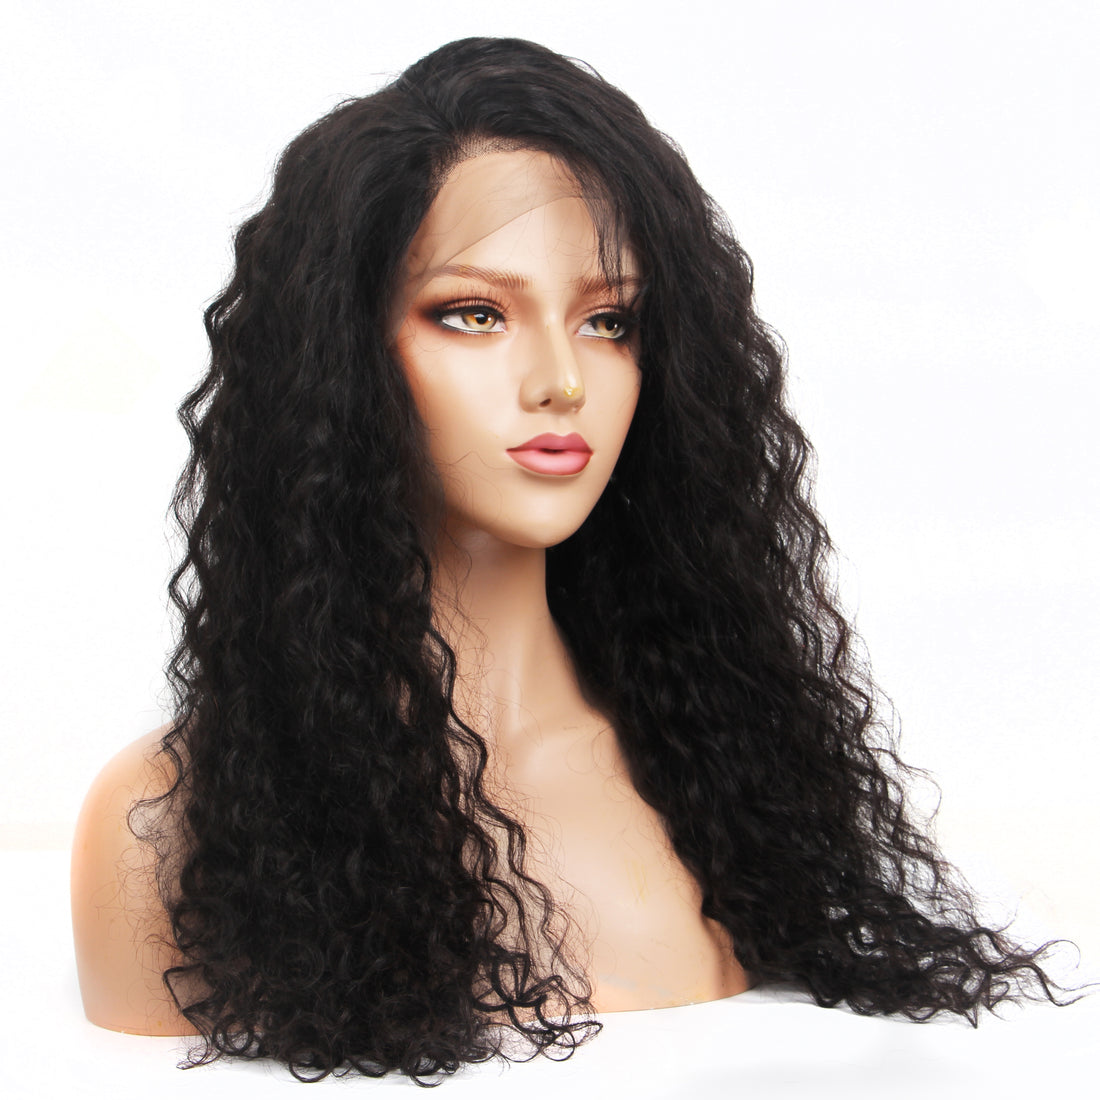 13x6 Human Hair Water Wave Wig 150%